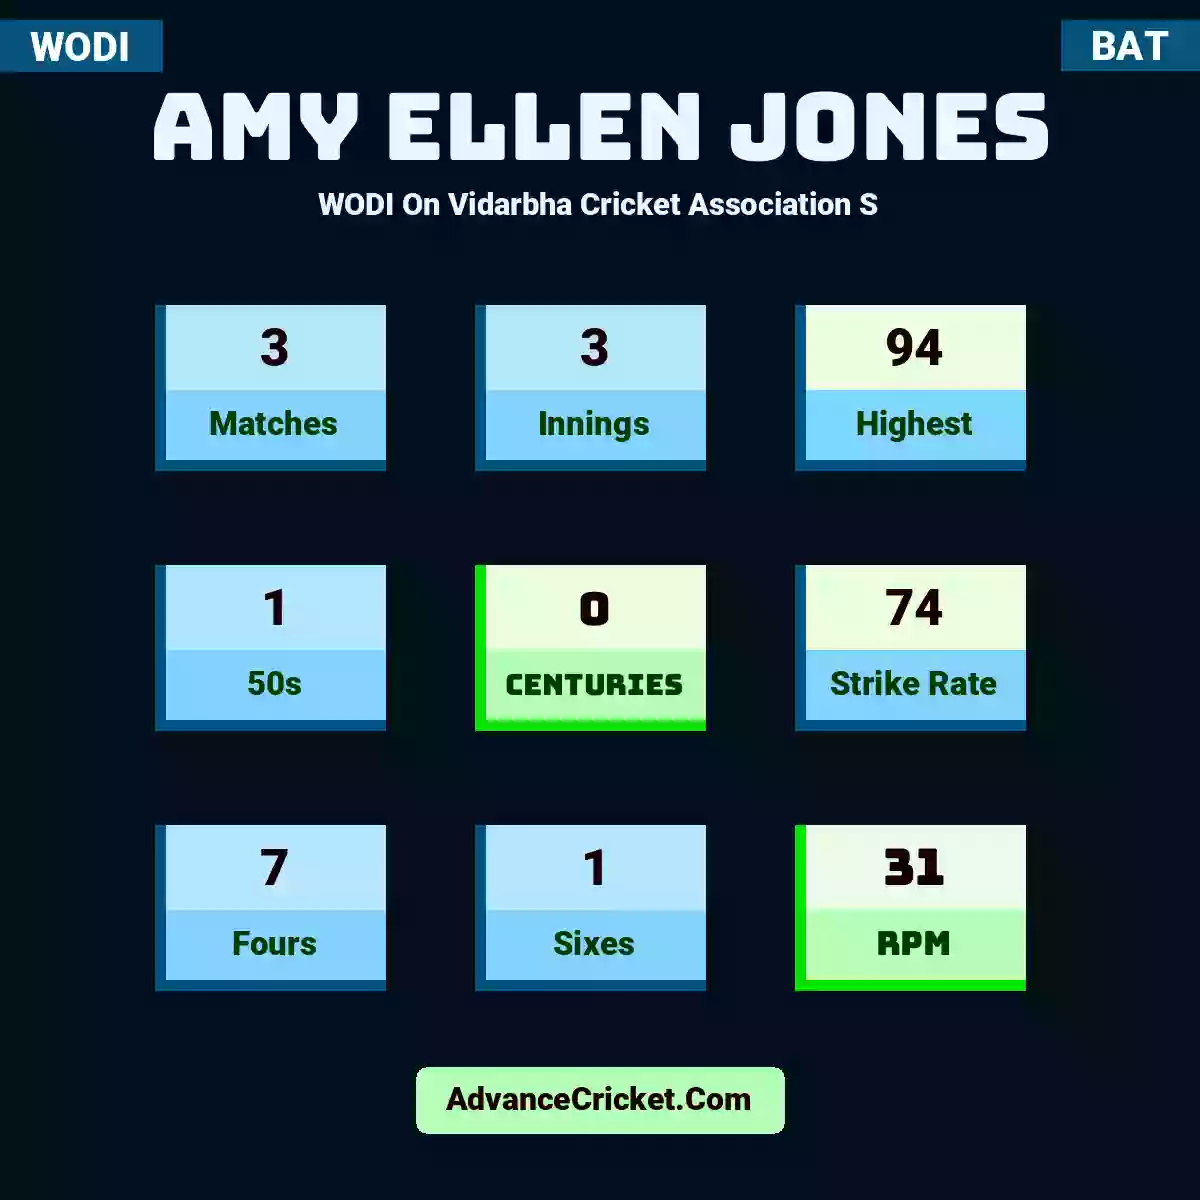 Amy Ellen Jones WODI  On Vidarbha Cricket Association S, Amy Ellen Jones played 3 matches, scored 94 runs as highest, 1 half-centuries, and 0 centuries, with a strike rate of 74. A.Jones hit 7 fours and 1 sixes, with an RPM of 31.